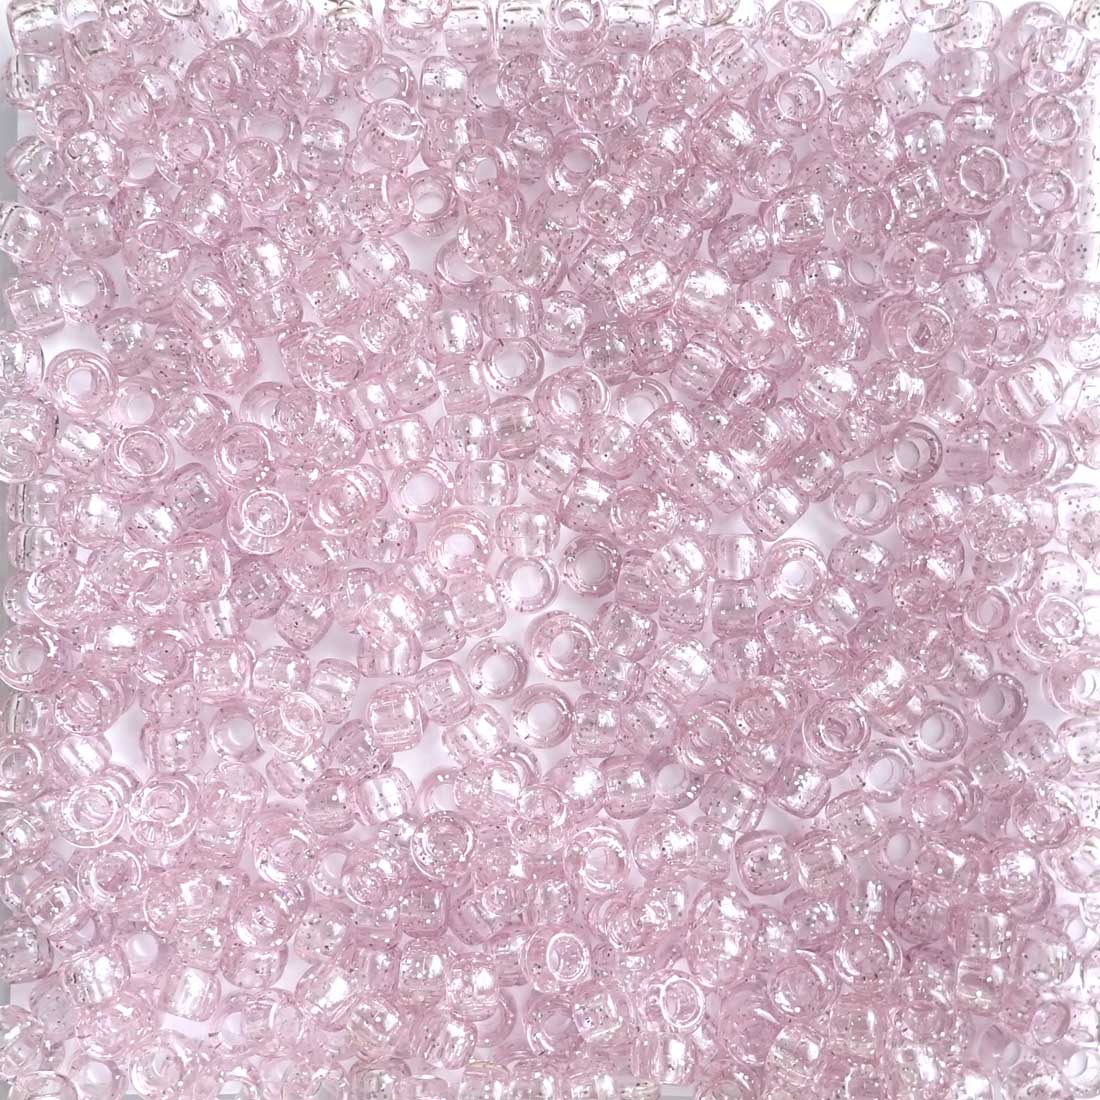 Pale Pink Glitter Plastic Pony Beads. Size 6 x 9 mm. Craft Beads.